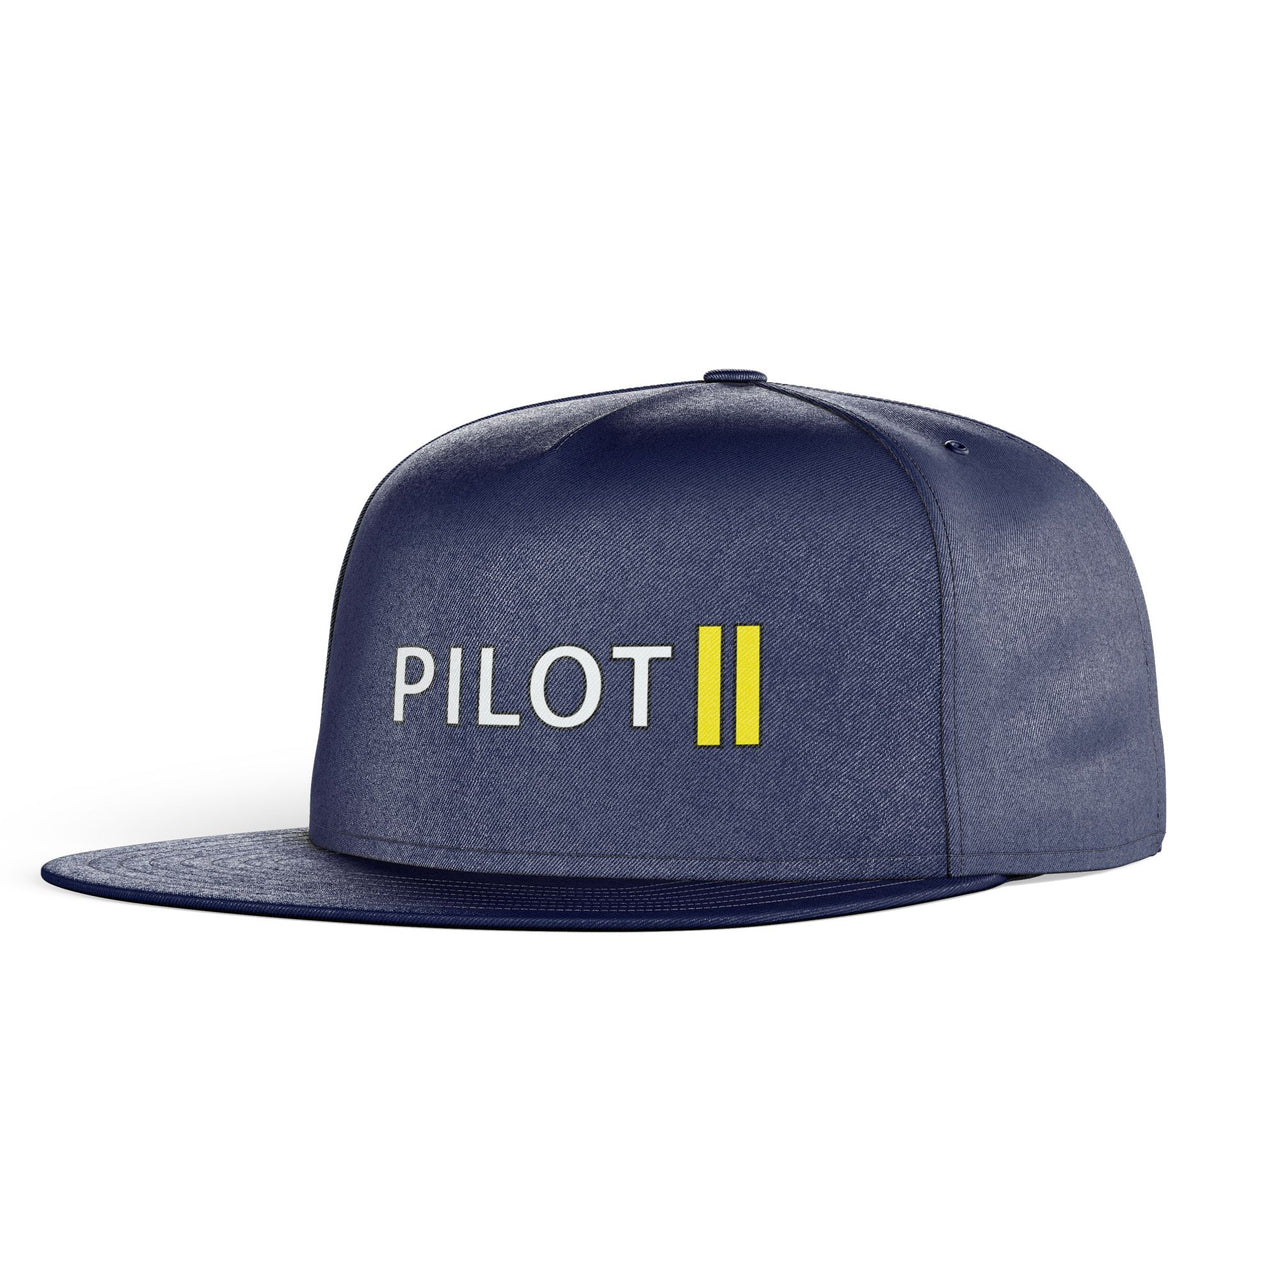 Pilot & Stripes (2 Lines) Designed Snapback Caps & Hats